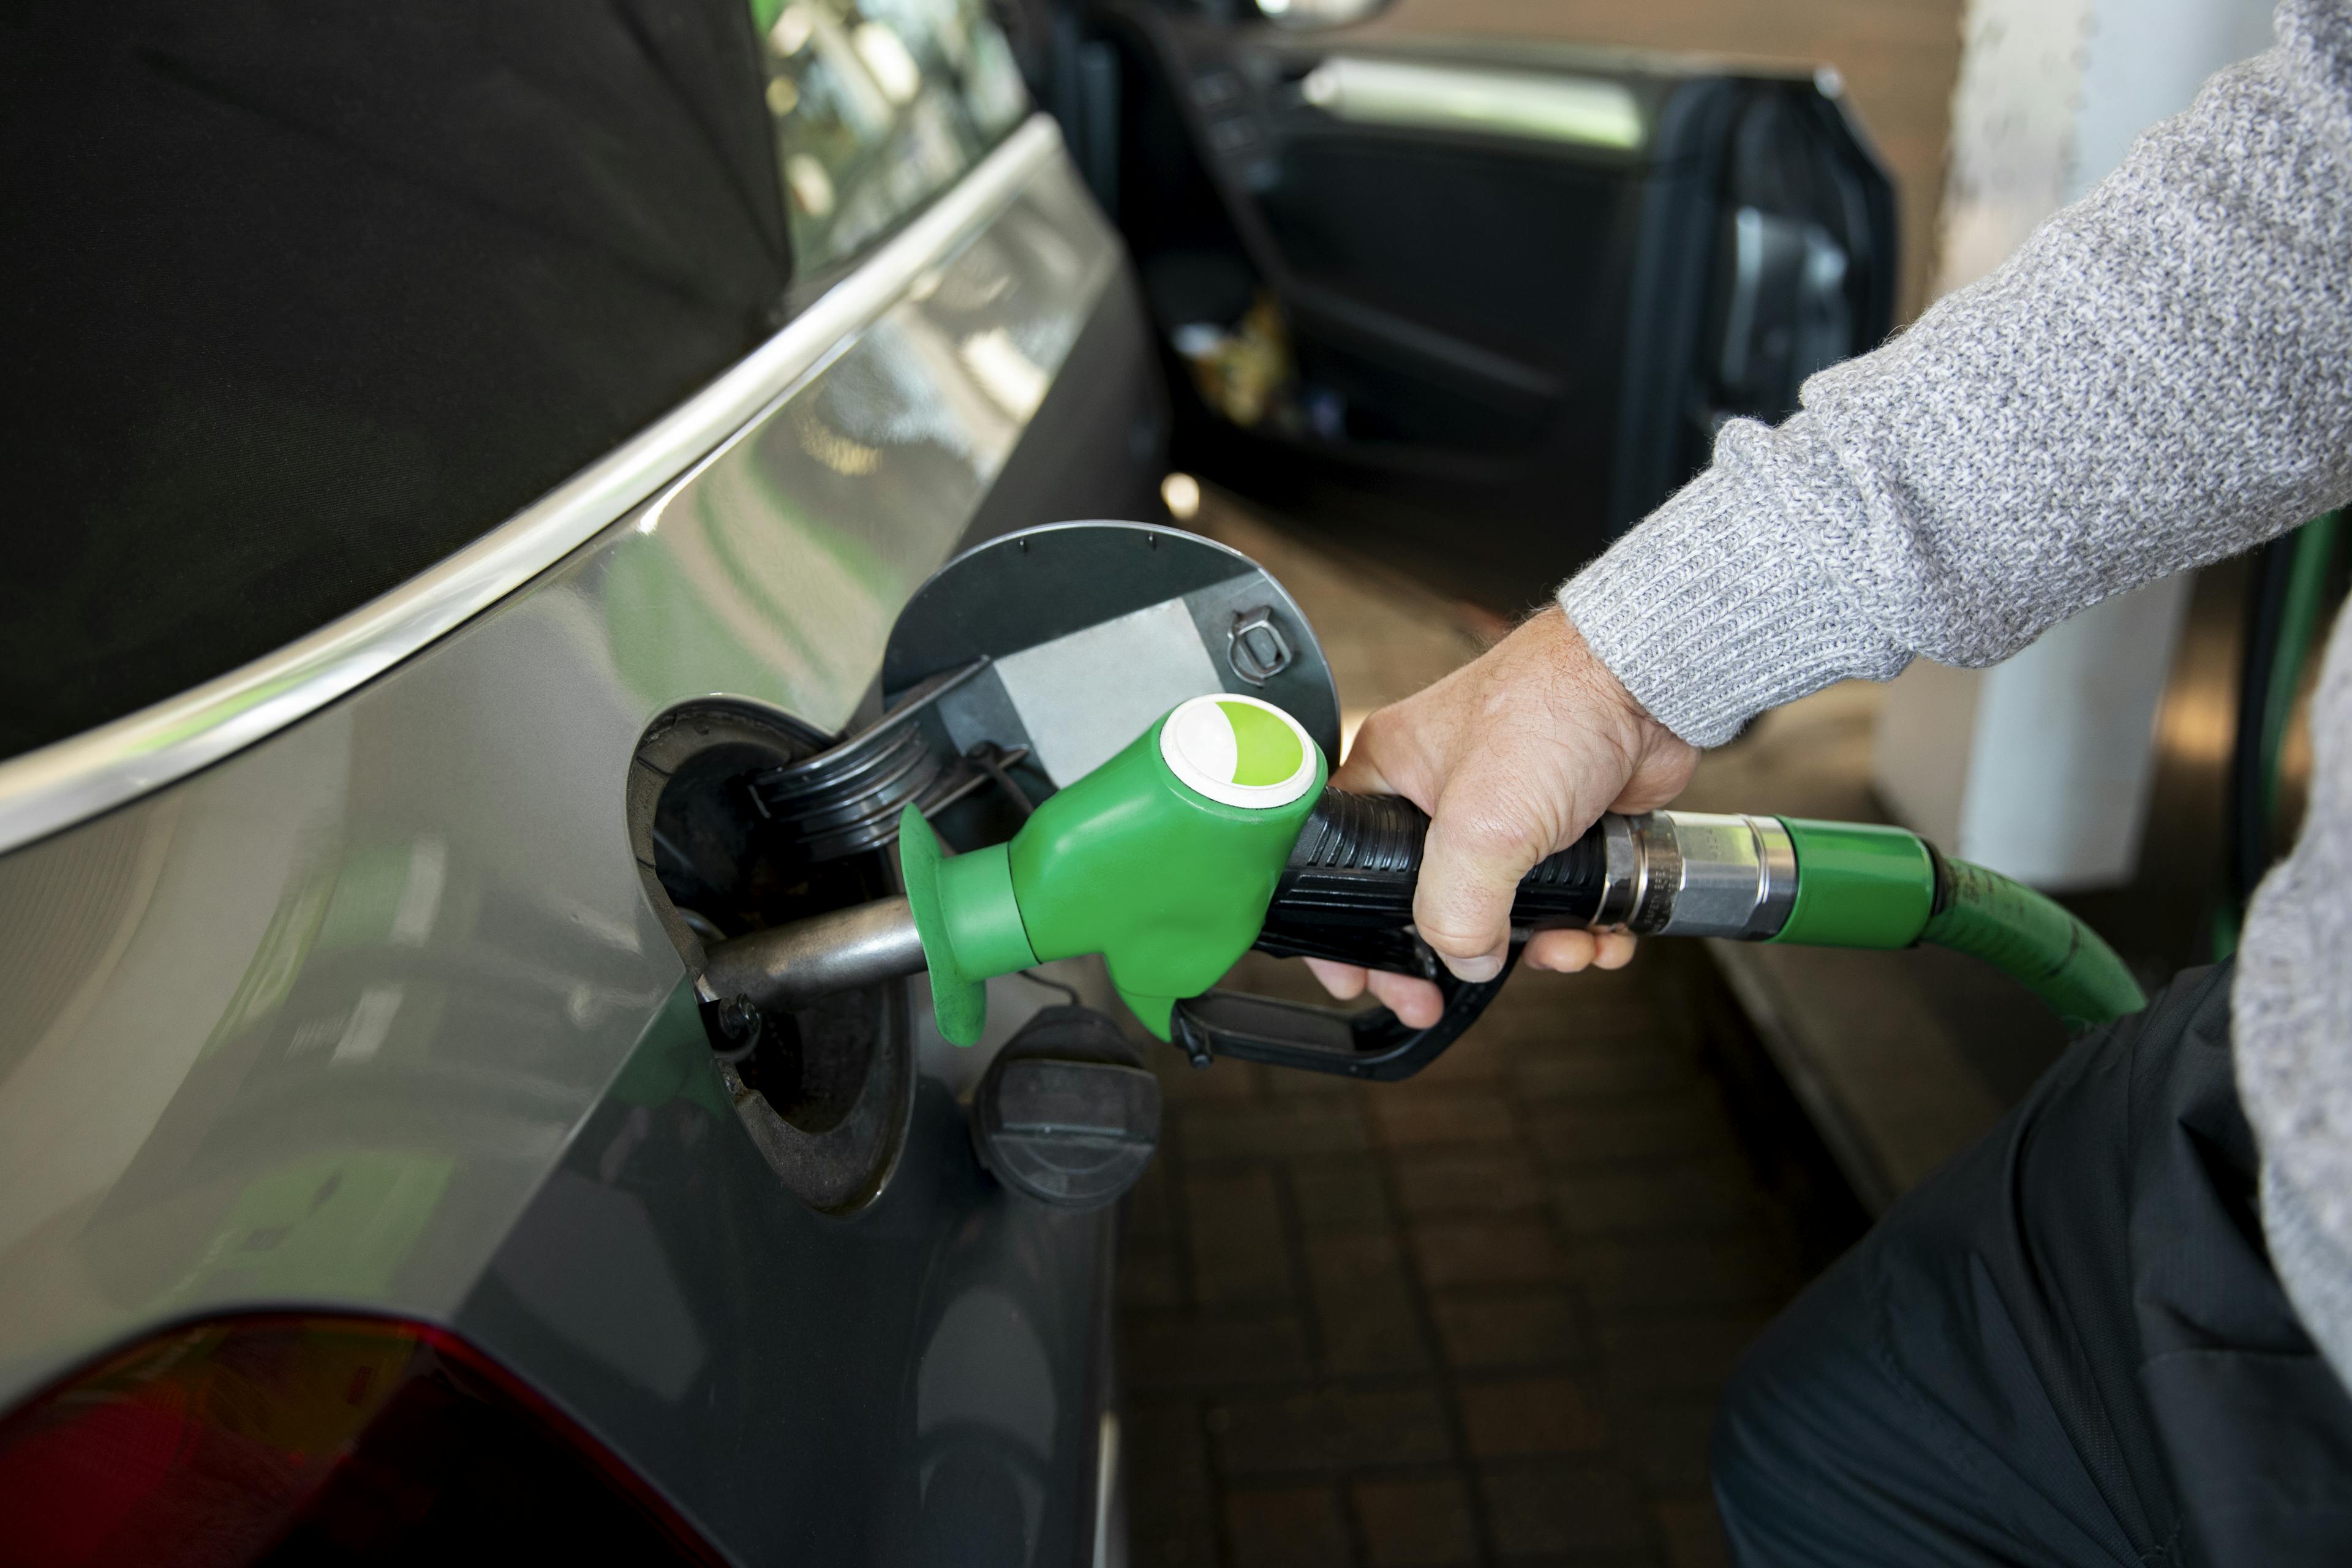 Use biofuel (ethanol) in light vehicles